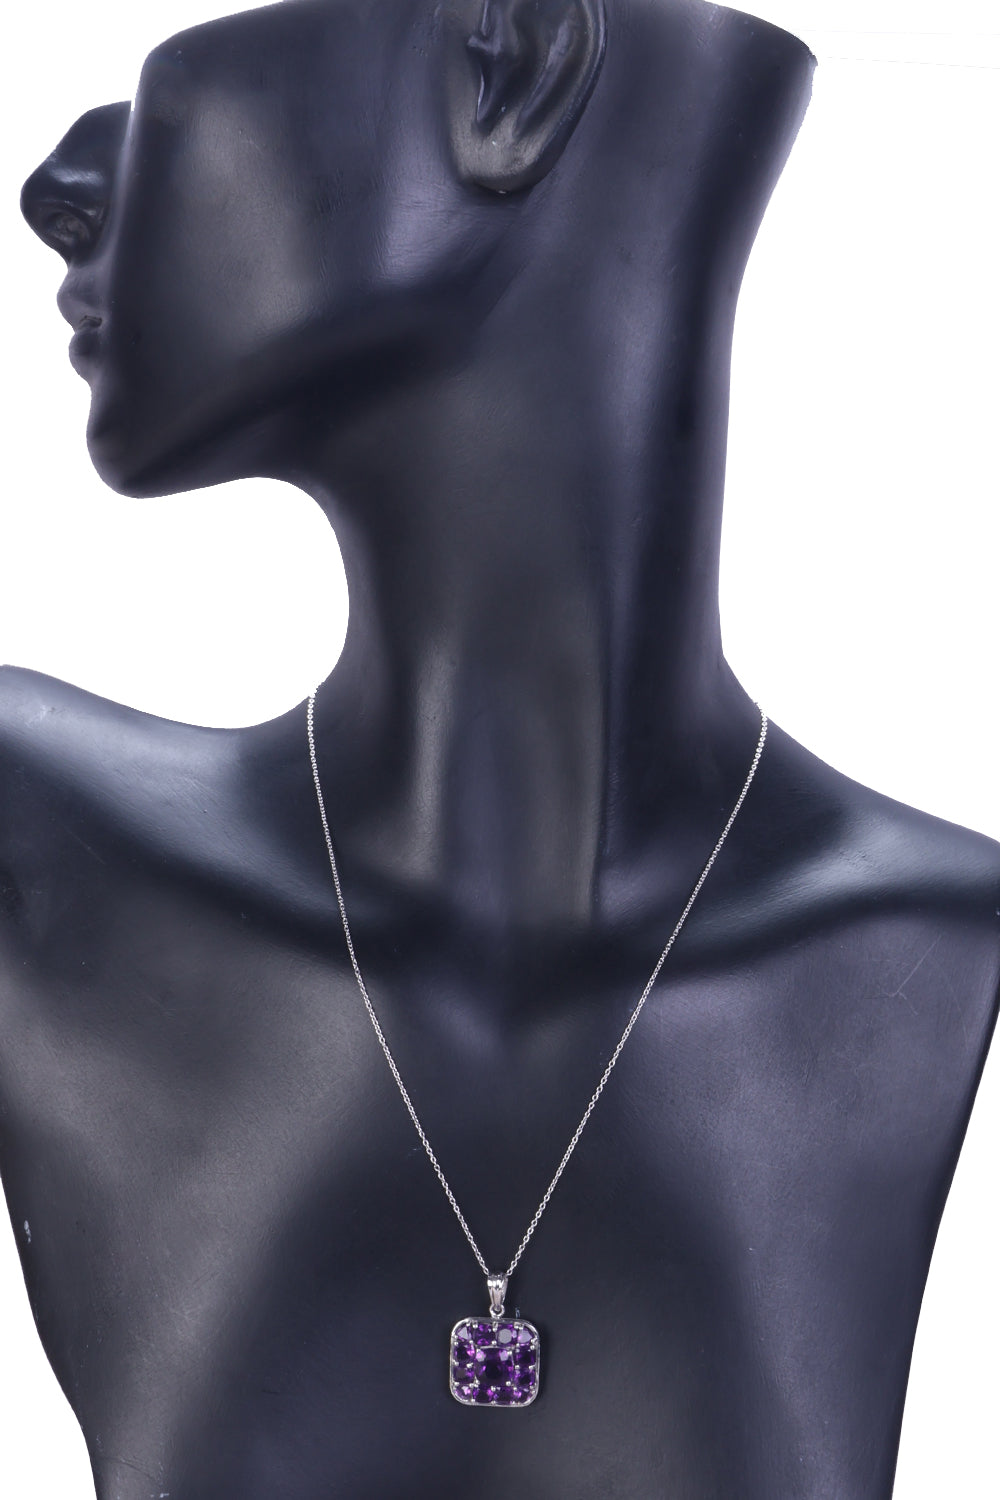 Amethyst Silver Necklace Pendant Chain -Avishya